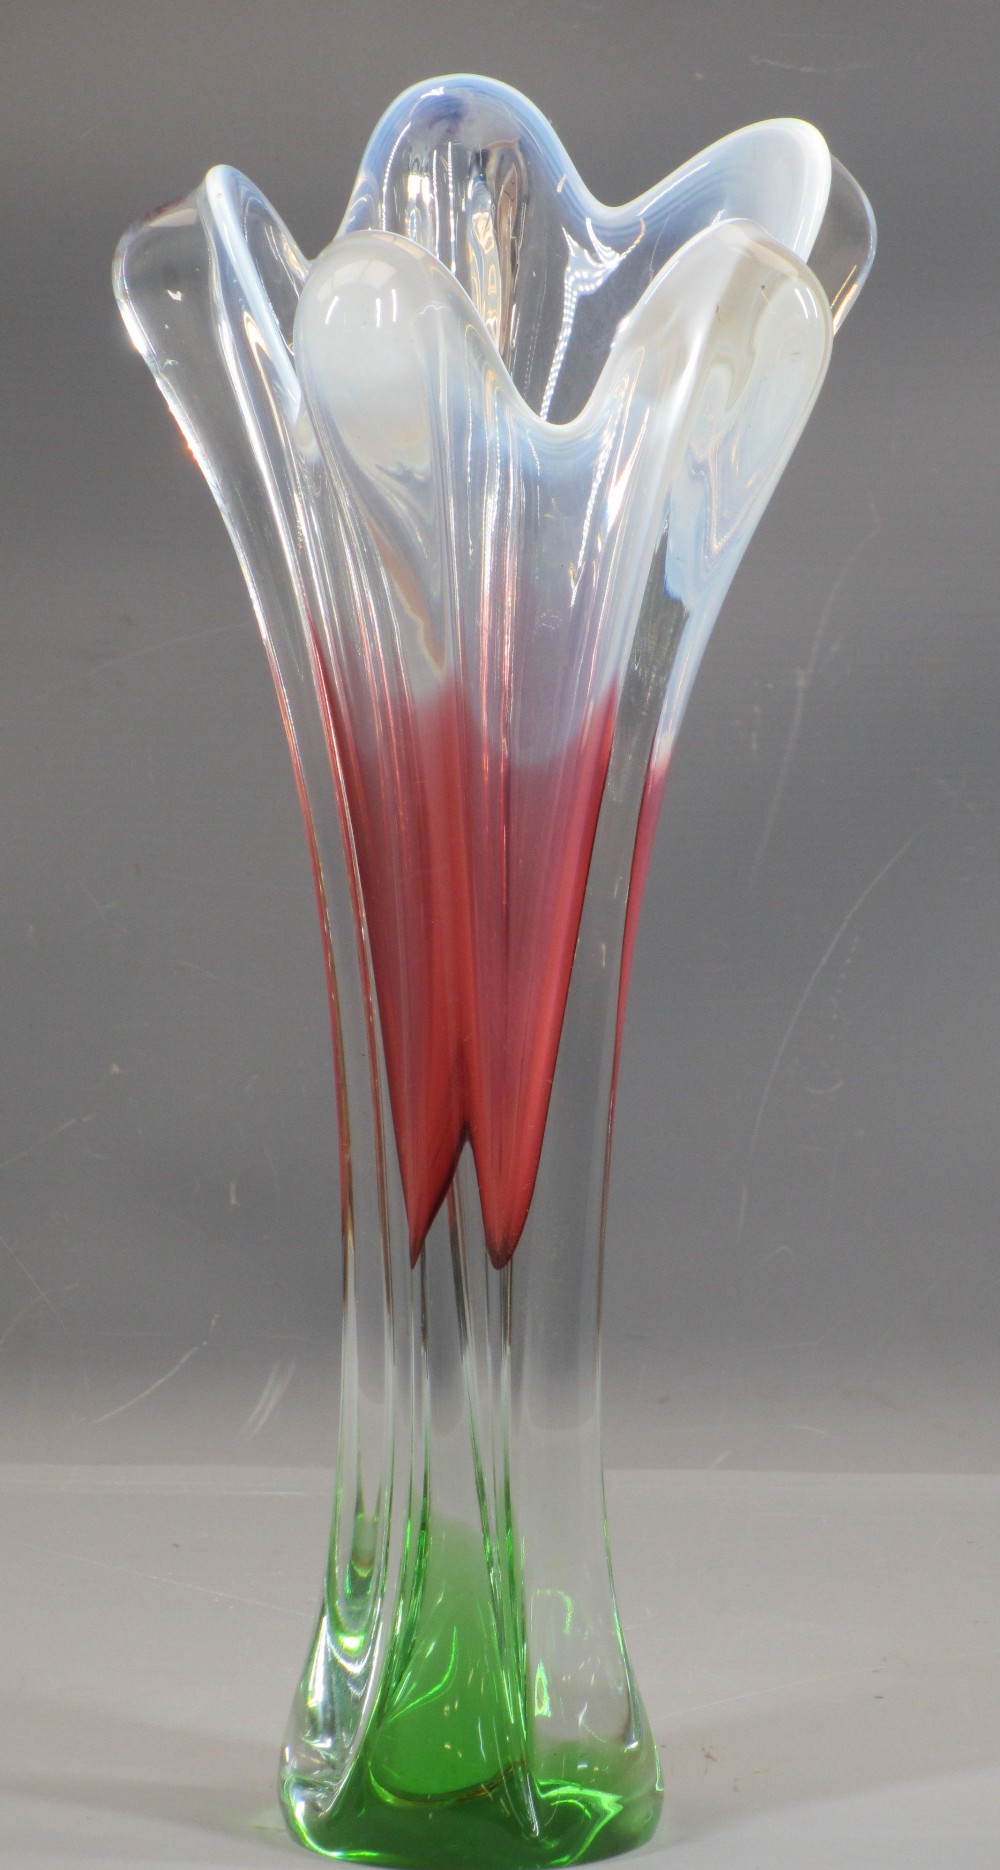 ART GLASSWARE - multi-coloured heavy glass vases, 35cms H the tallest, ETC - Image 2 of 5